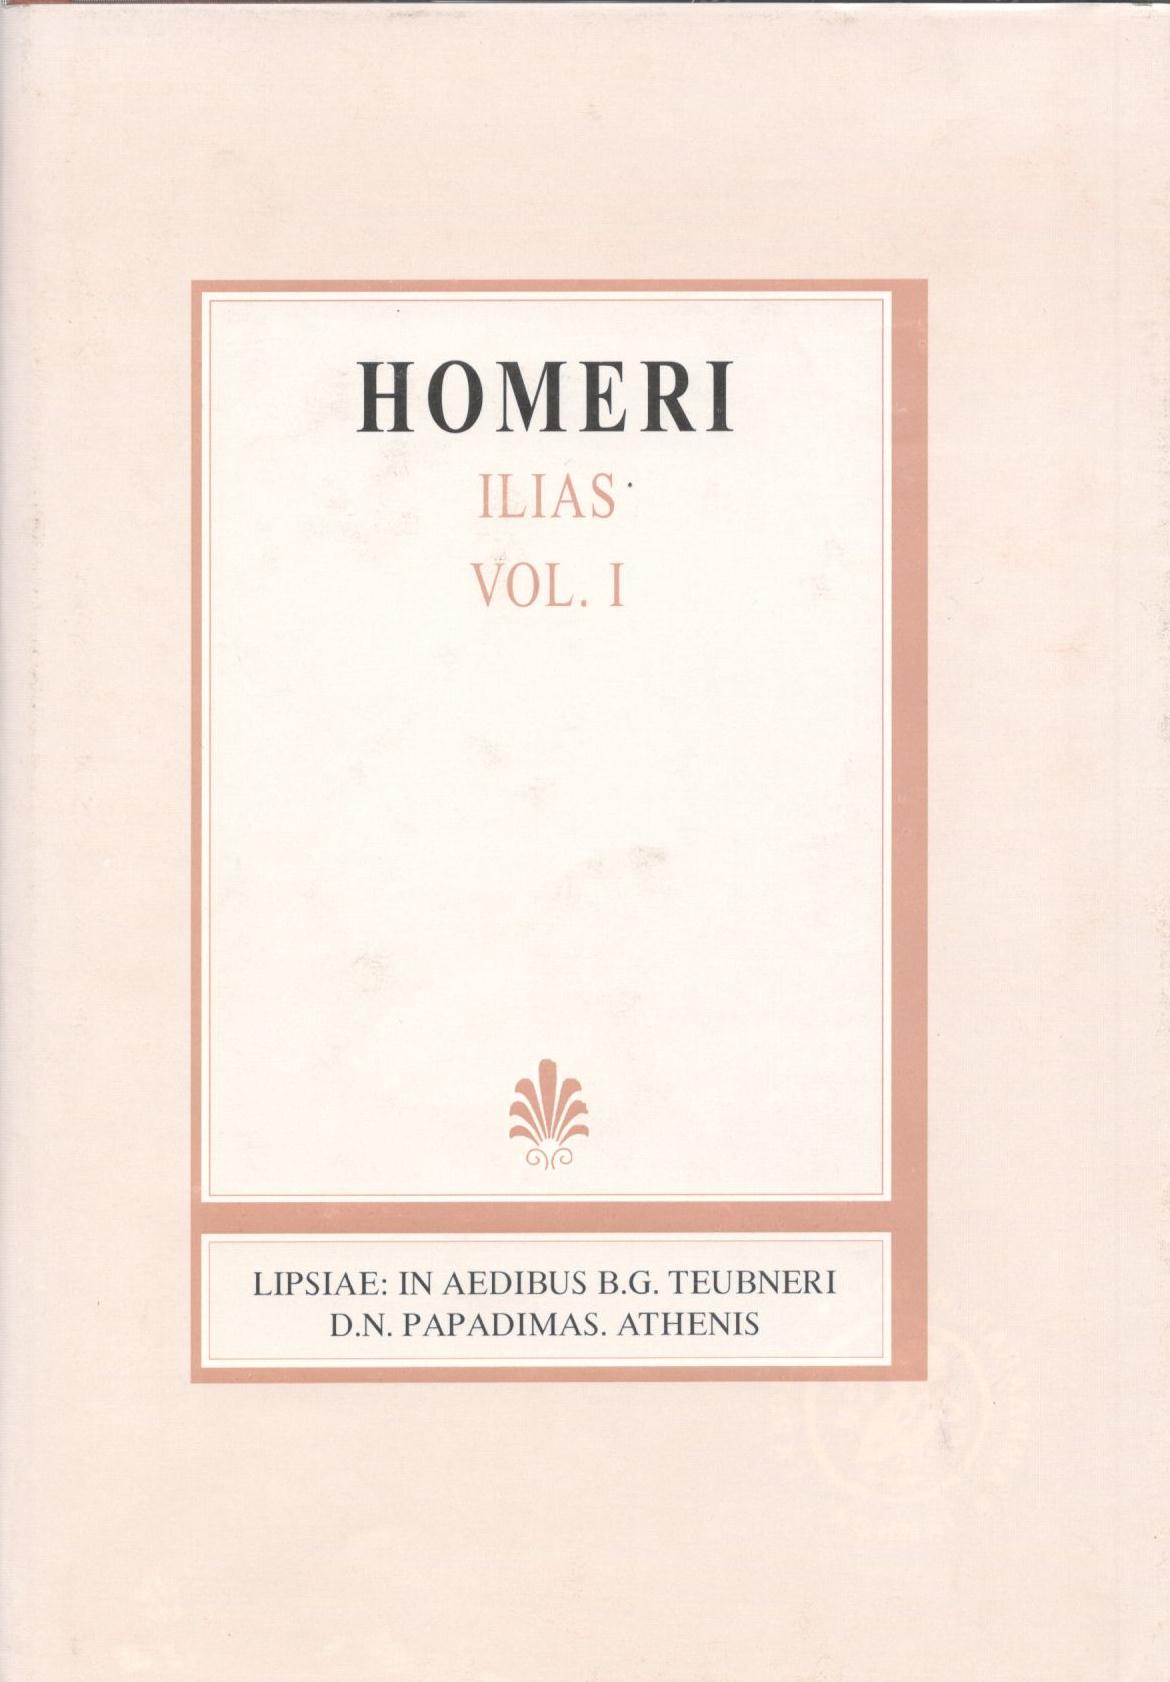 Homeri, Ilias, Vol. I, [Ομήρου, Ιλιάς, Ραψωδίαι Α-Μ, τ. Α